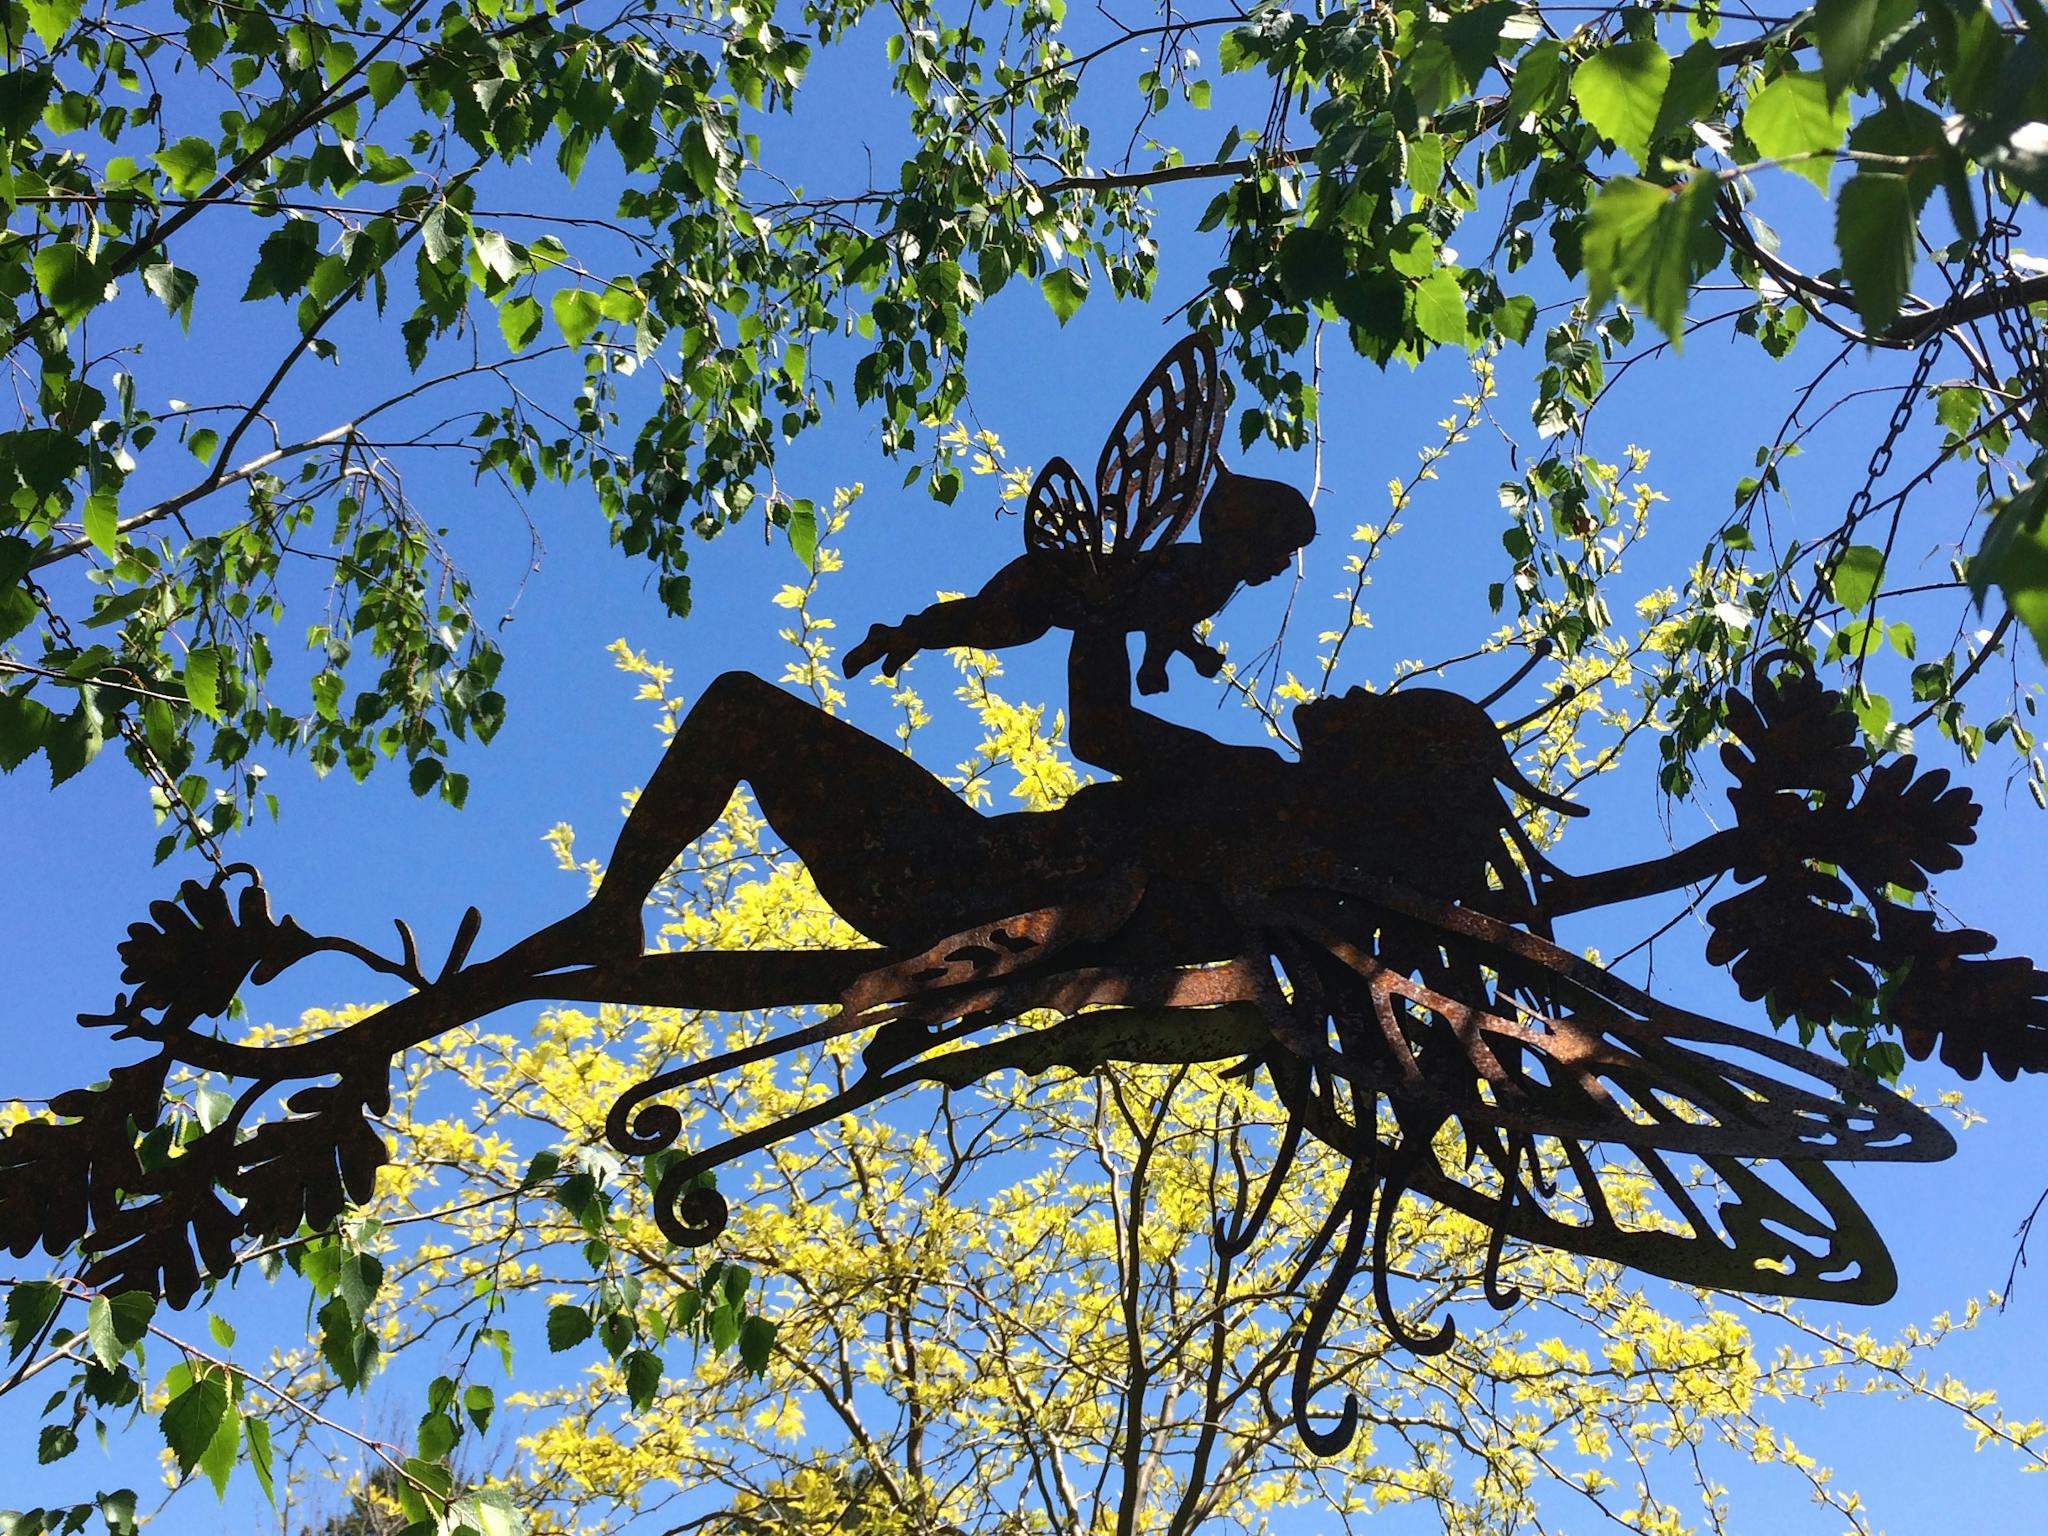 Fairies in the Garden. Plasma cut steel sculpture by Jacky Ragg.